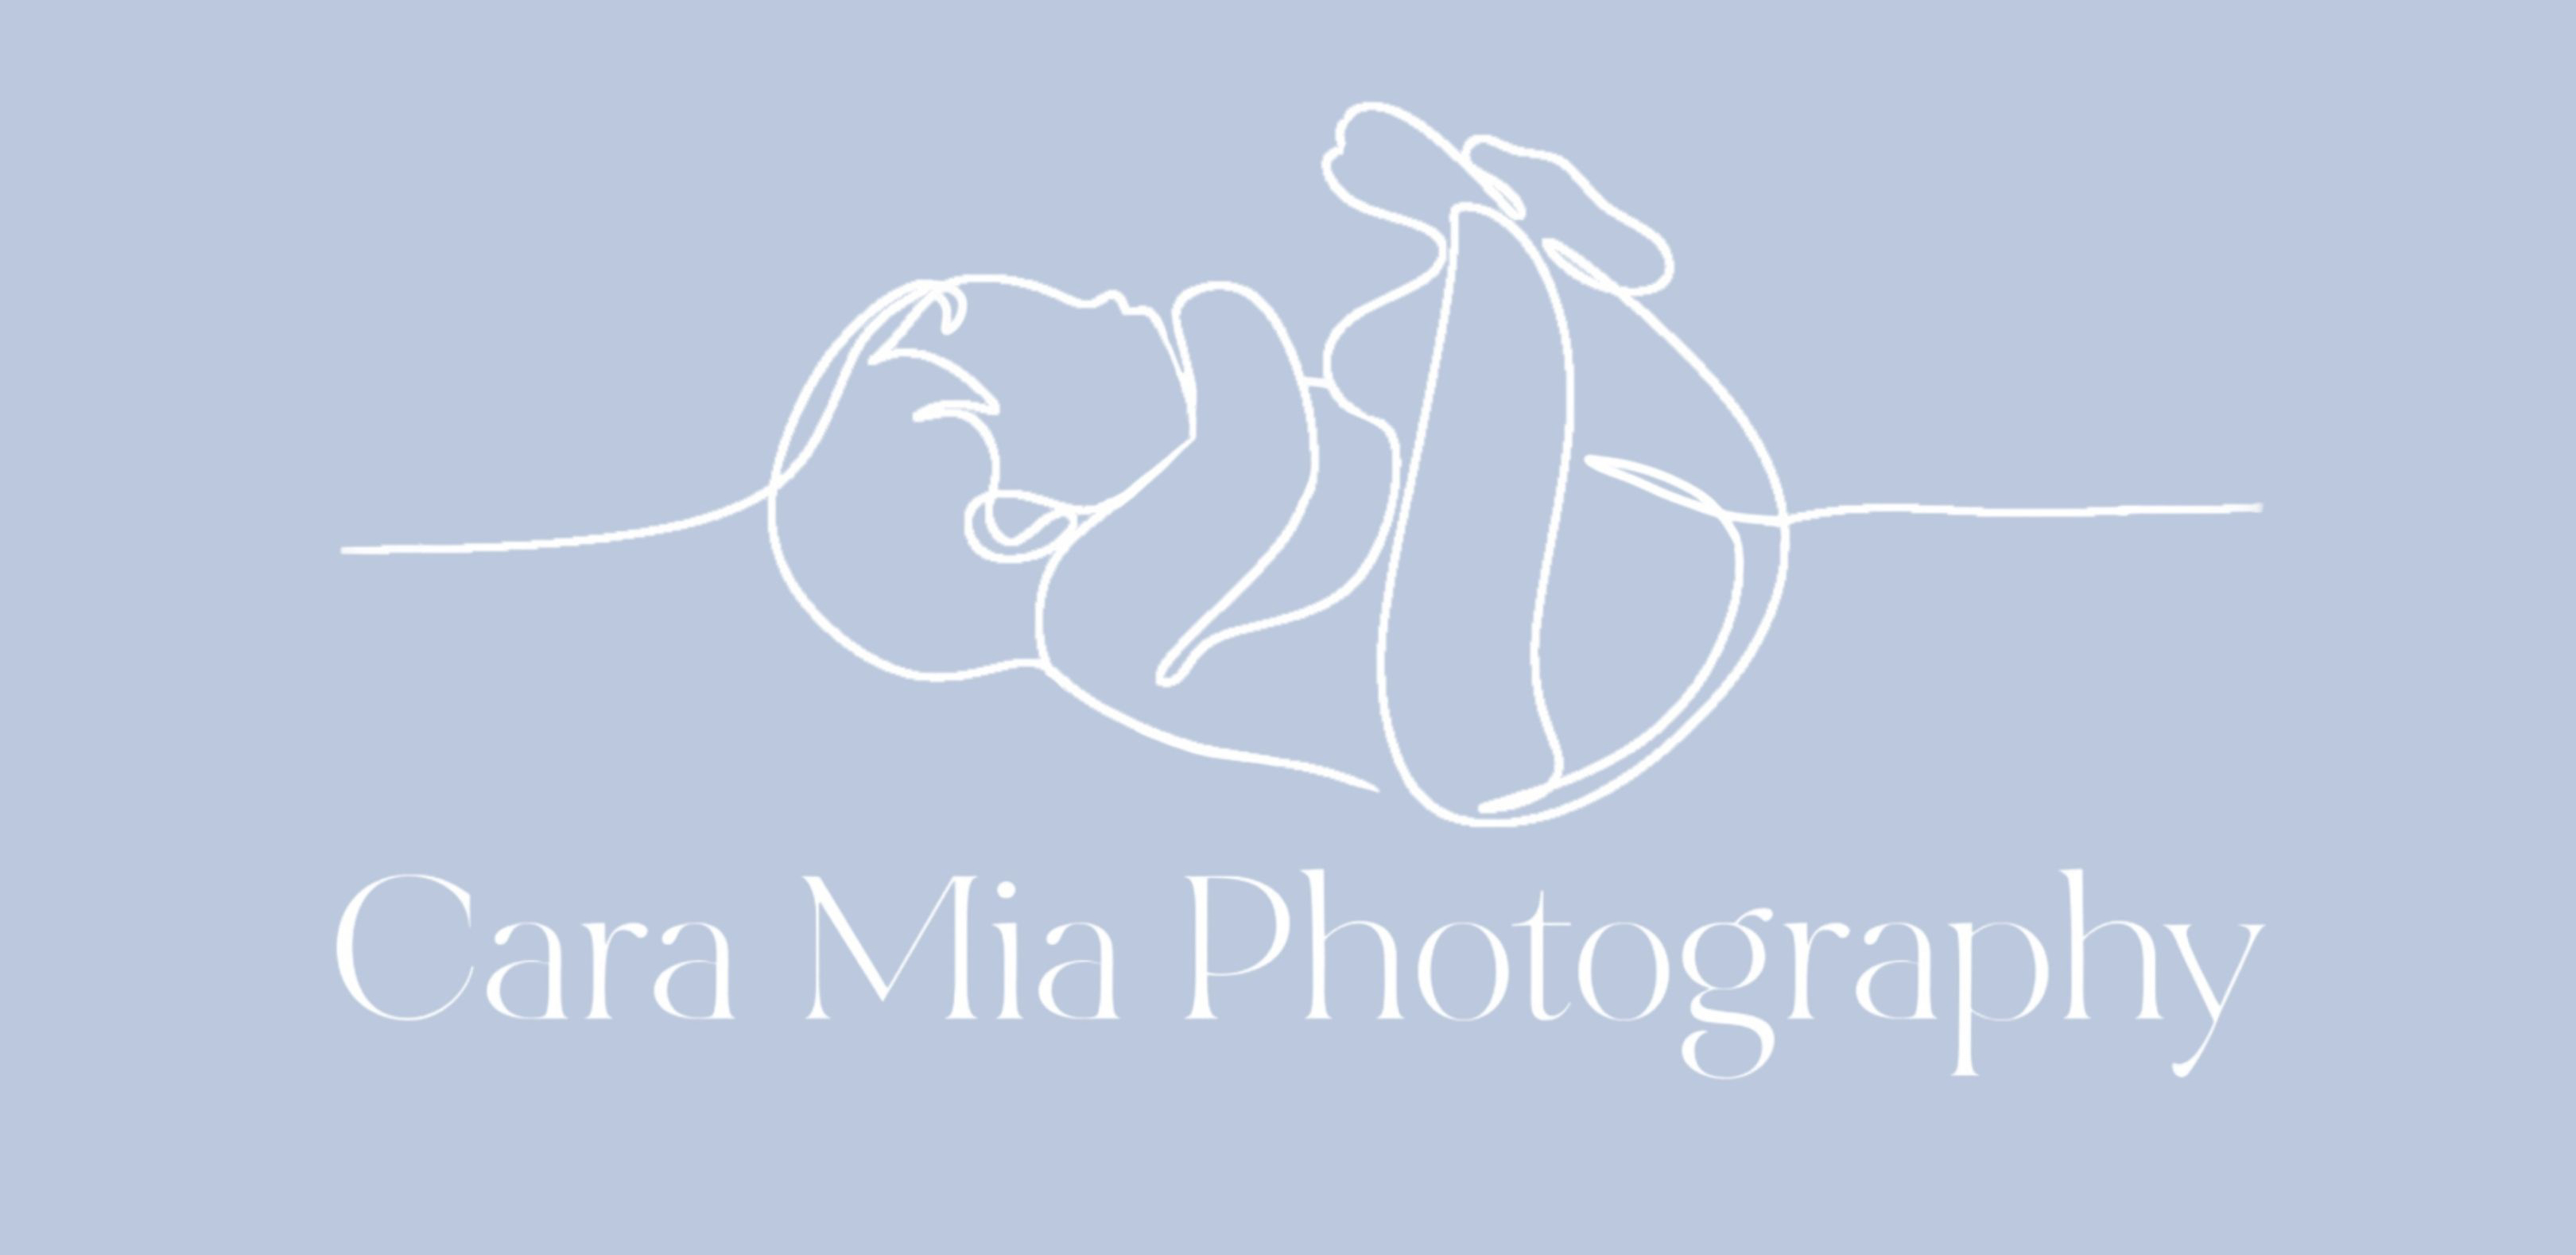 Cara Mia Photography's logo